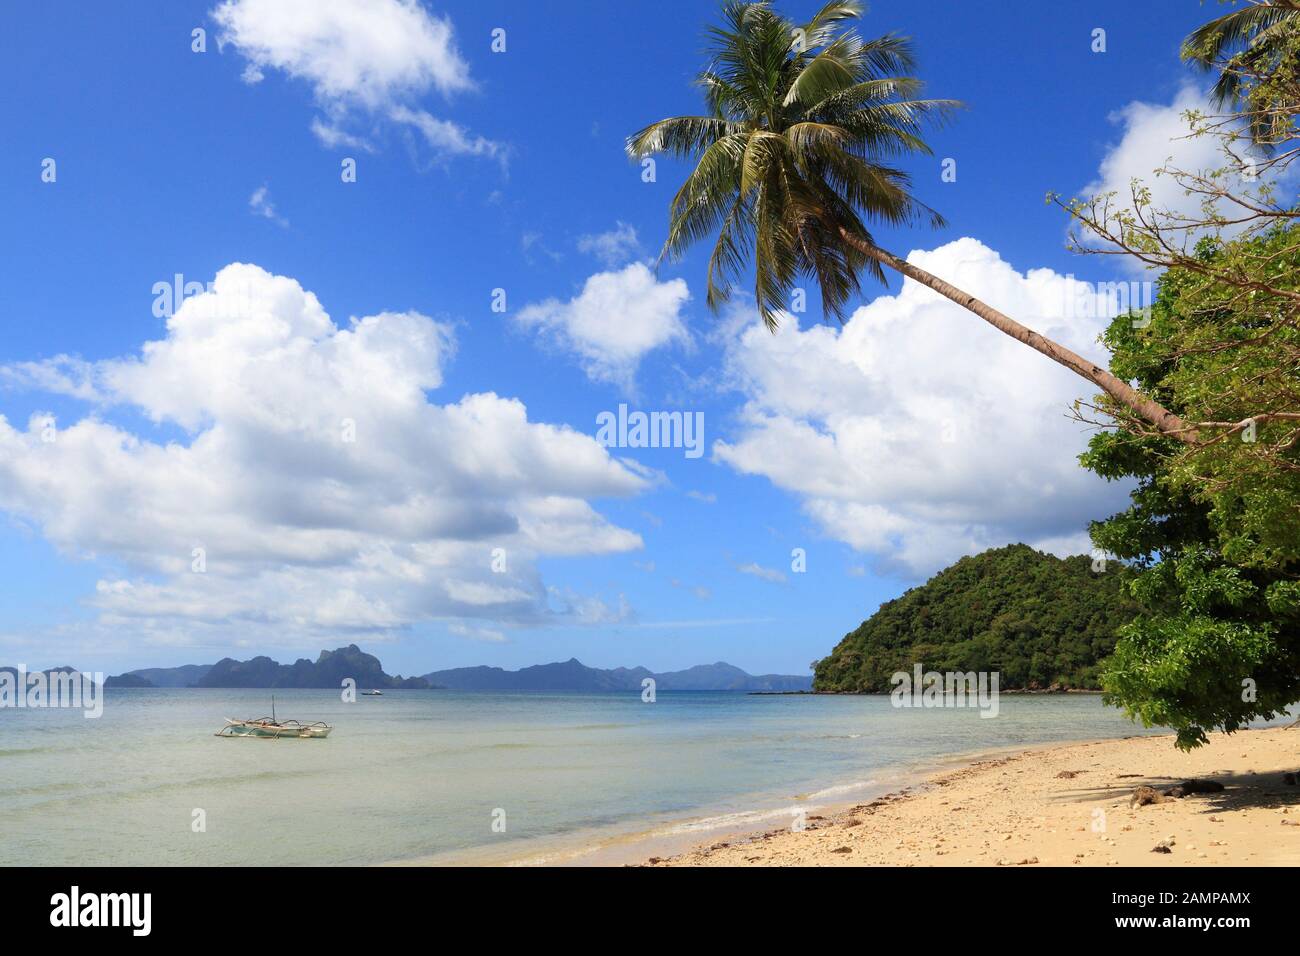 Leaning palm trees of Las Cabanas beach in El Nido, Palawan island, Philippines. Stock Photo